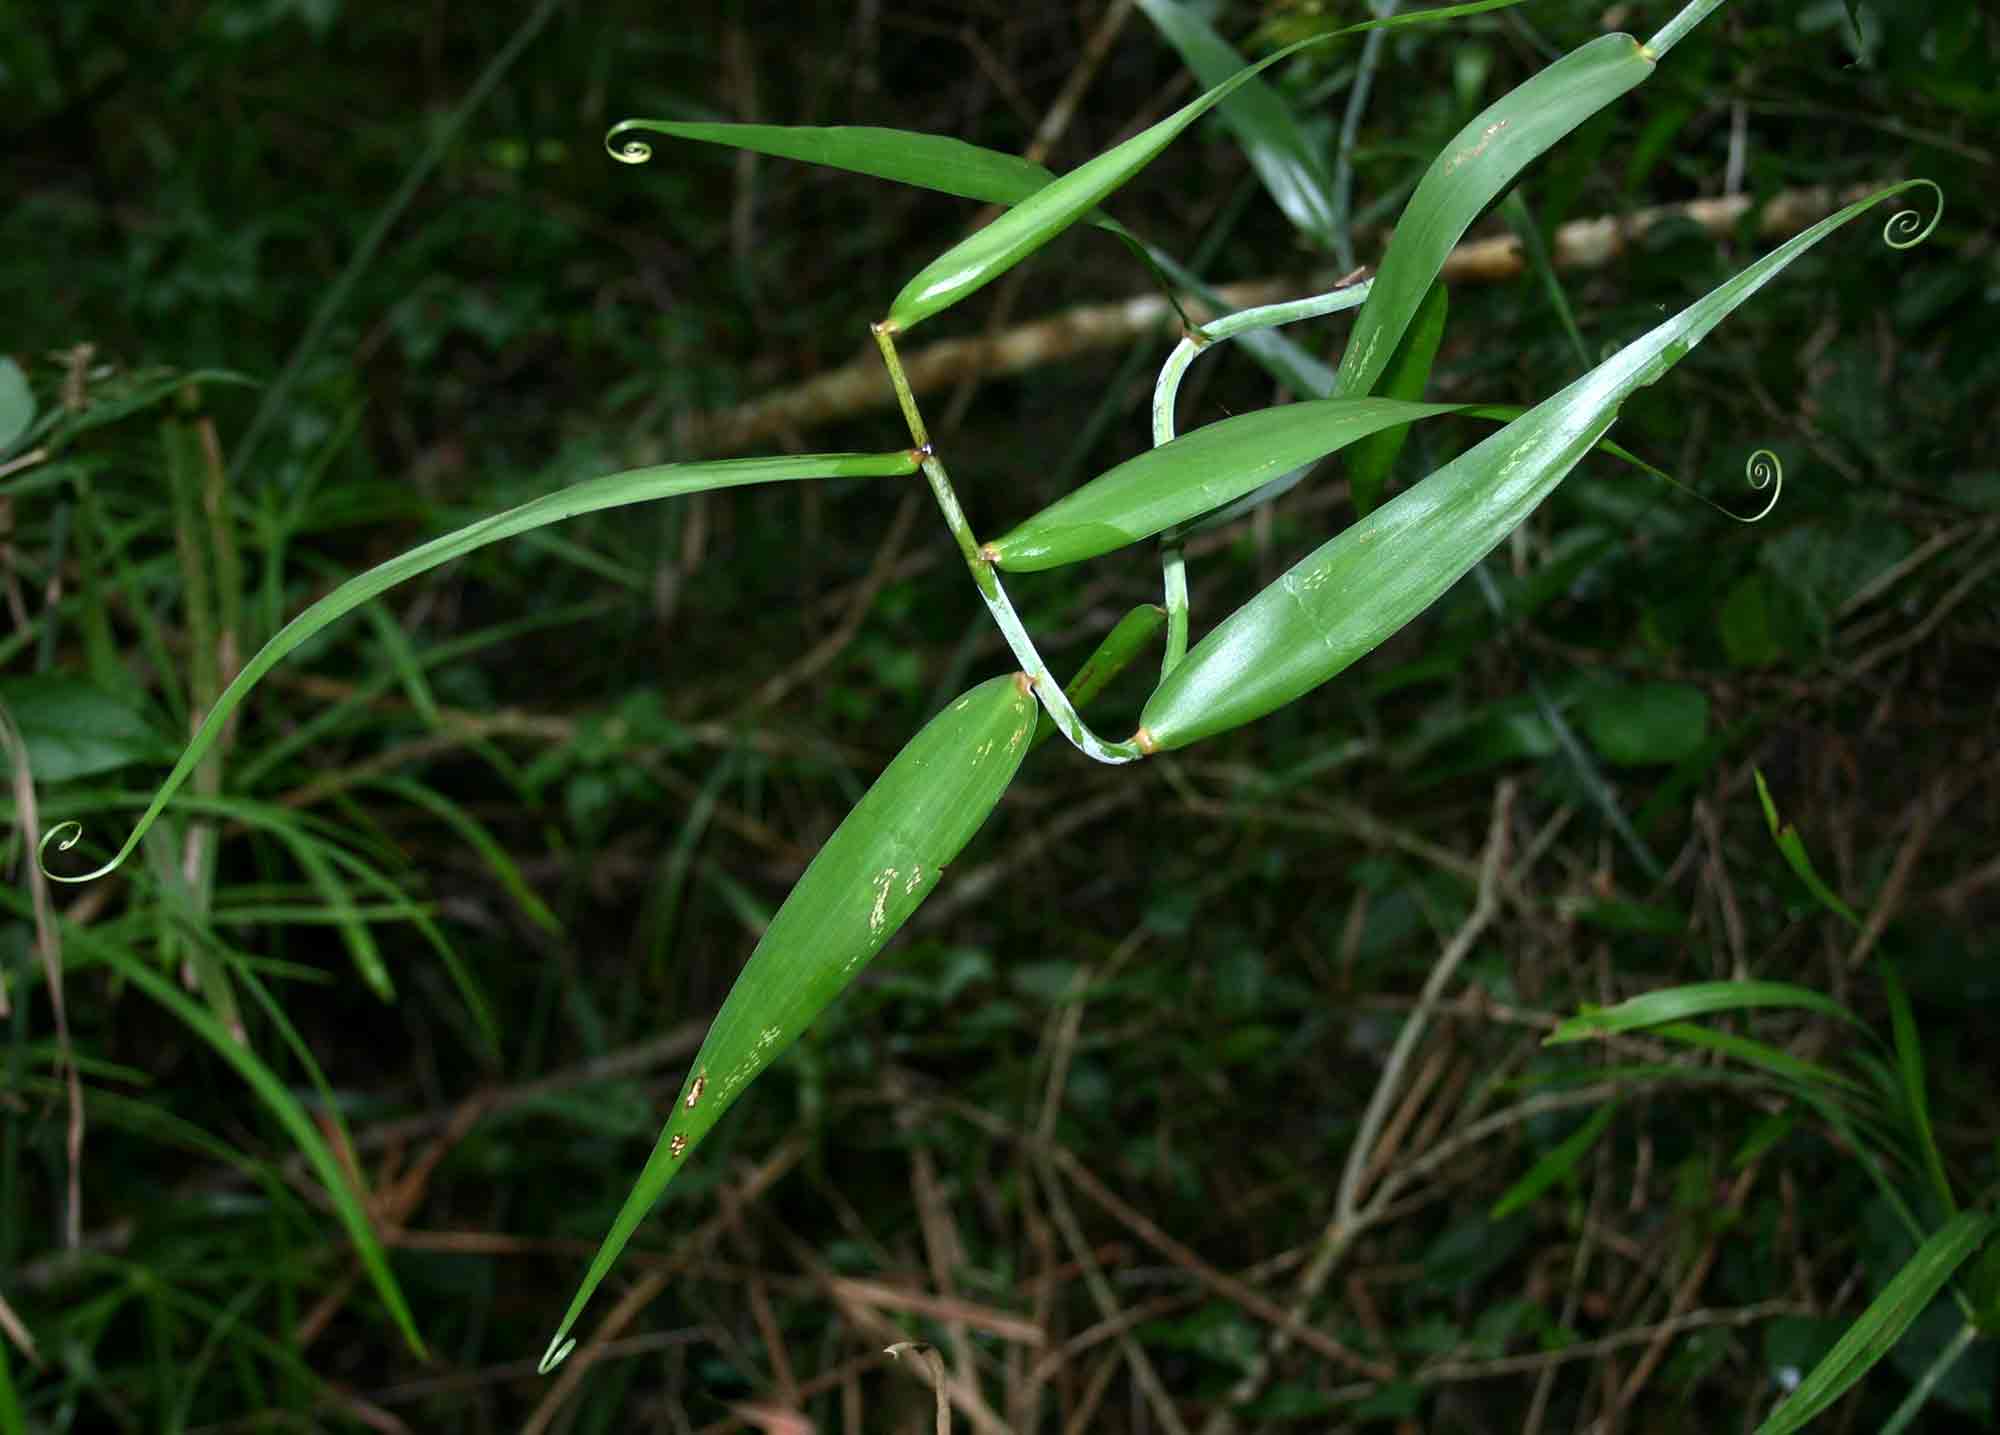 Flagellaria guineensis